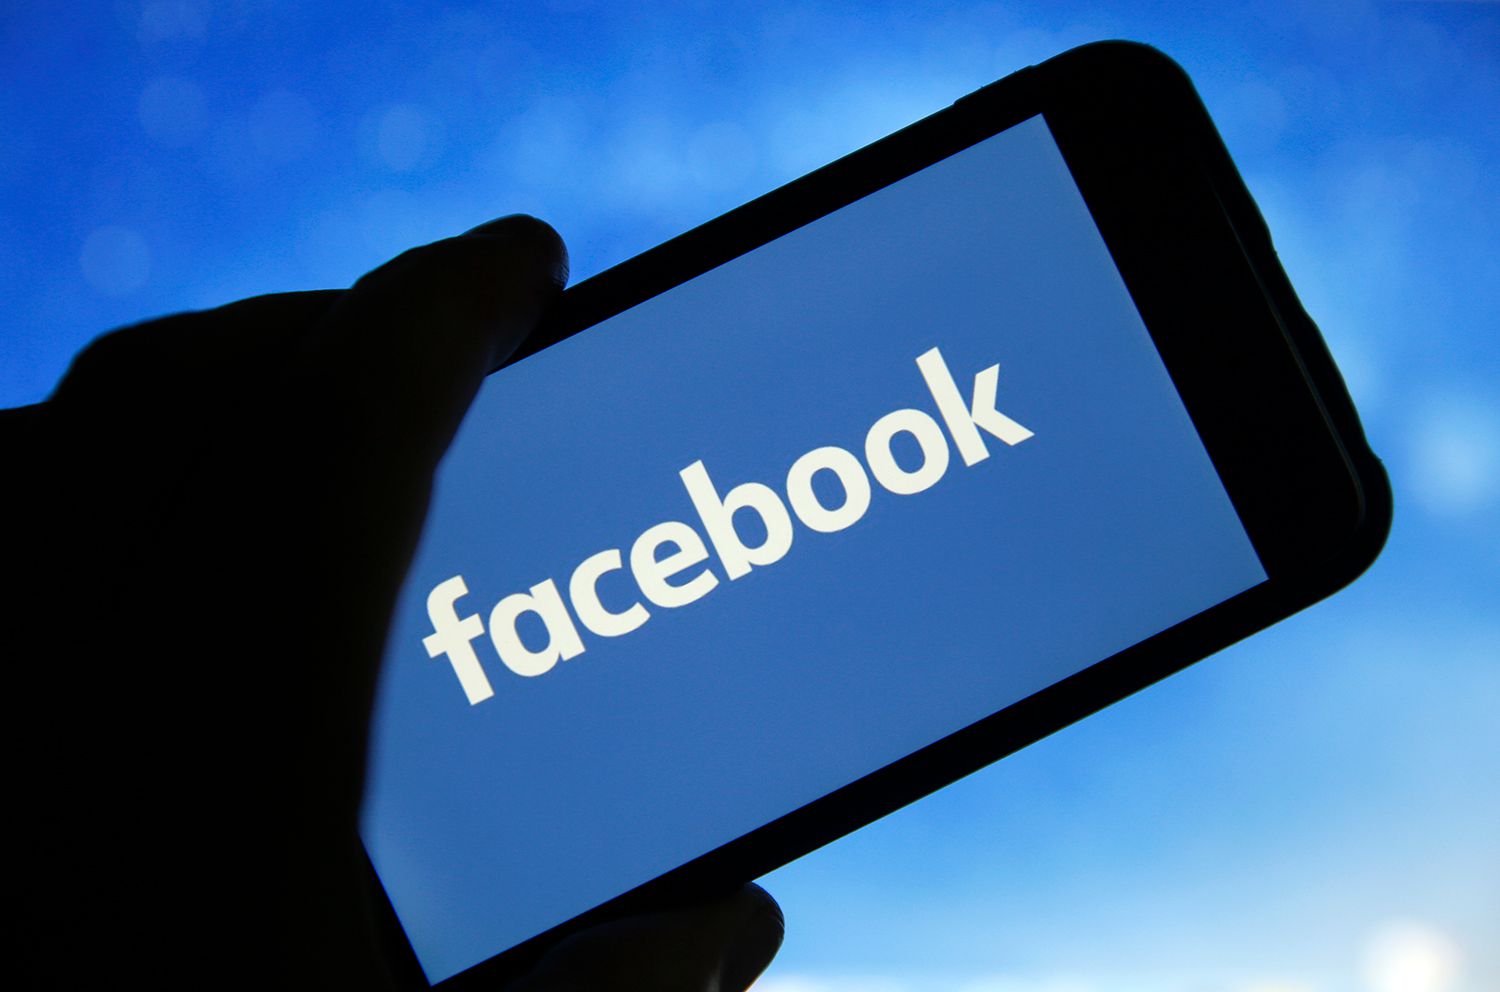 Facebook-ի կես միլիարդ օգտատերերի անձնական տվյալները հասանելի են դարձել բոլորի համար